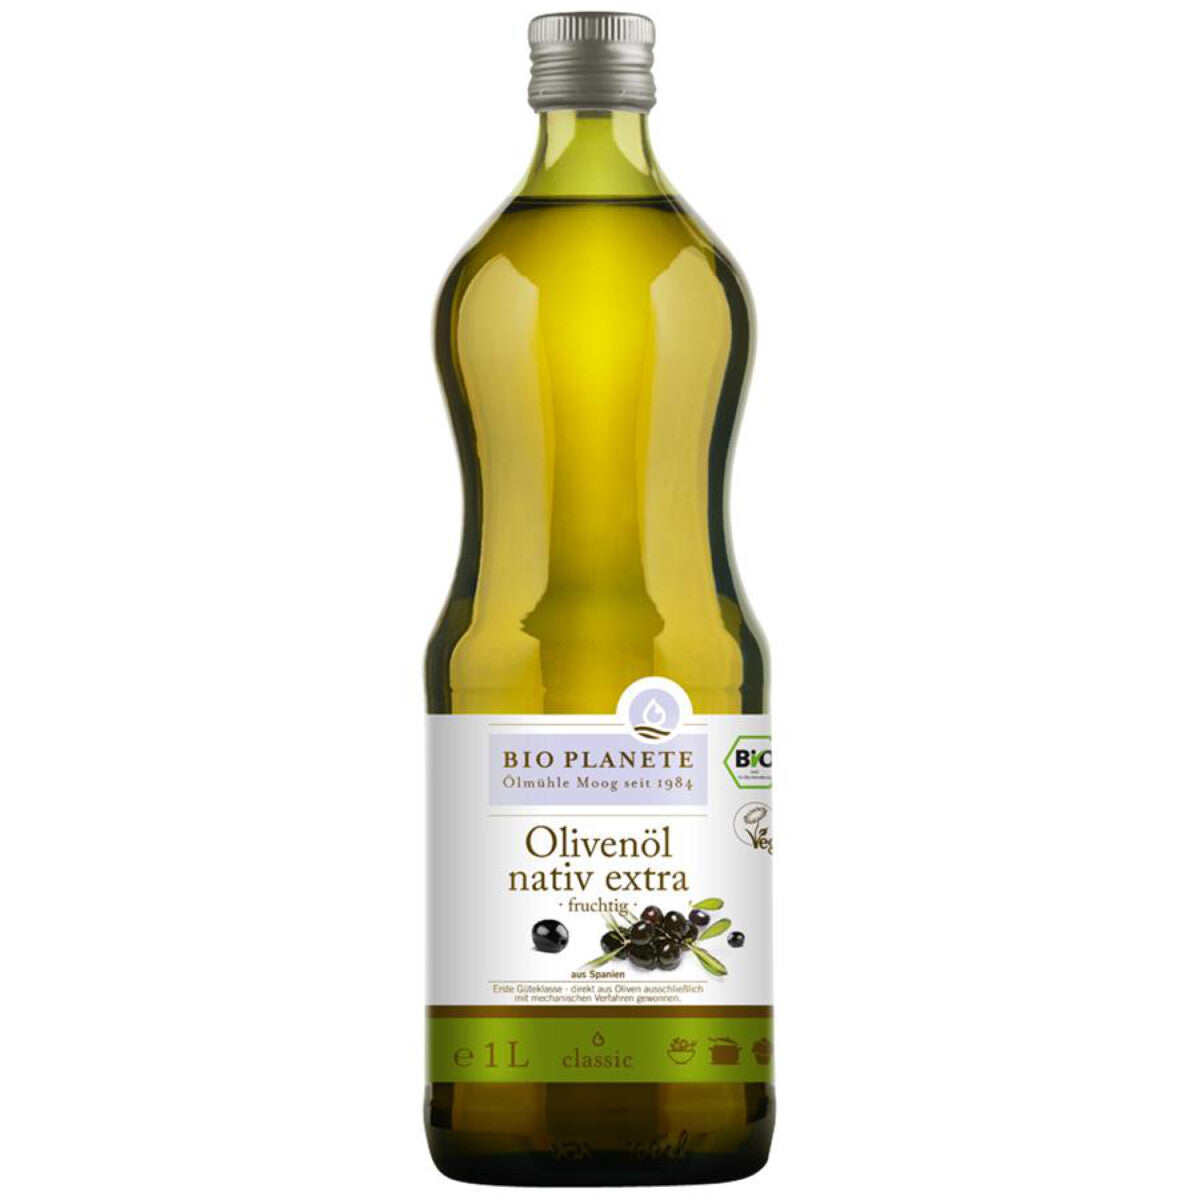 BIO PLANETE Olivenöl fruchtig, nativ extra - 1 l